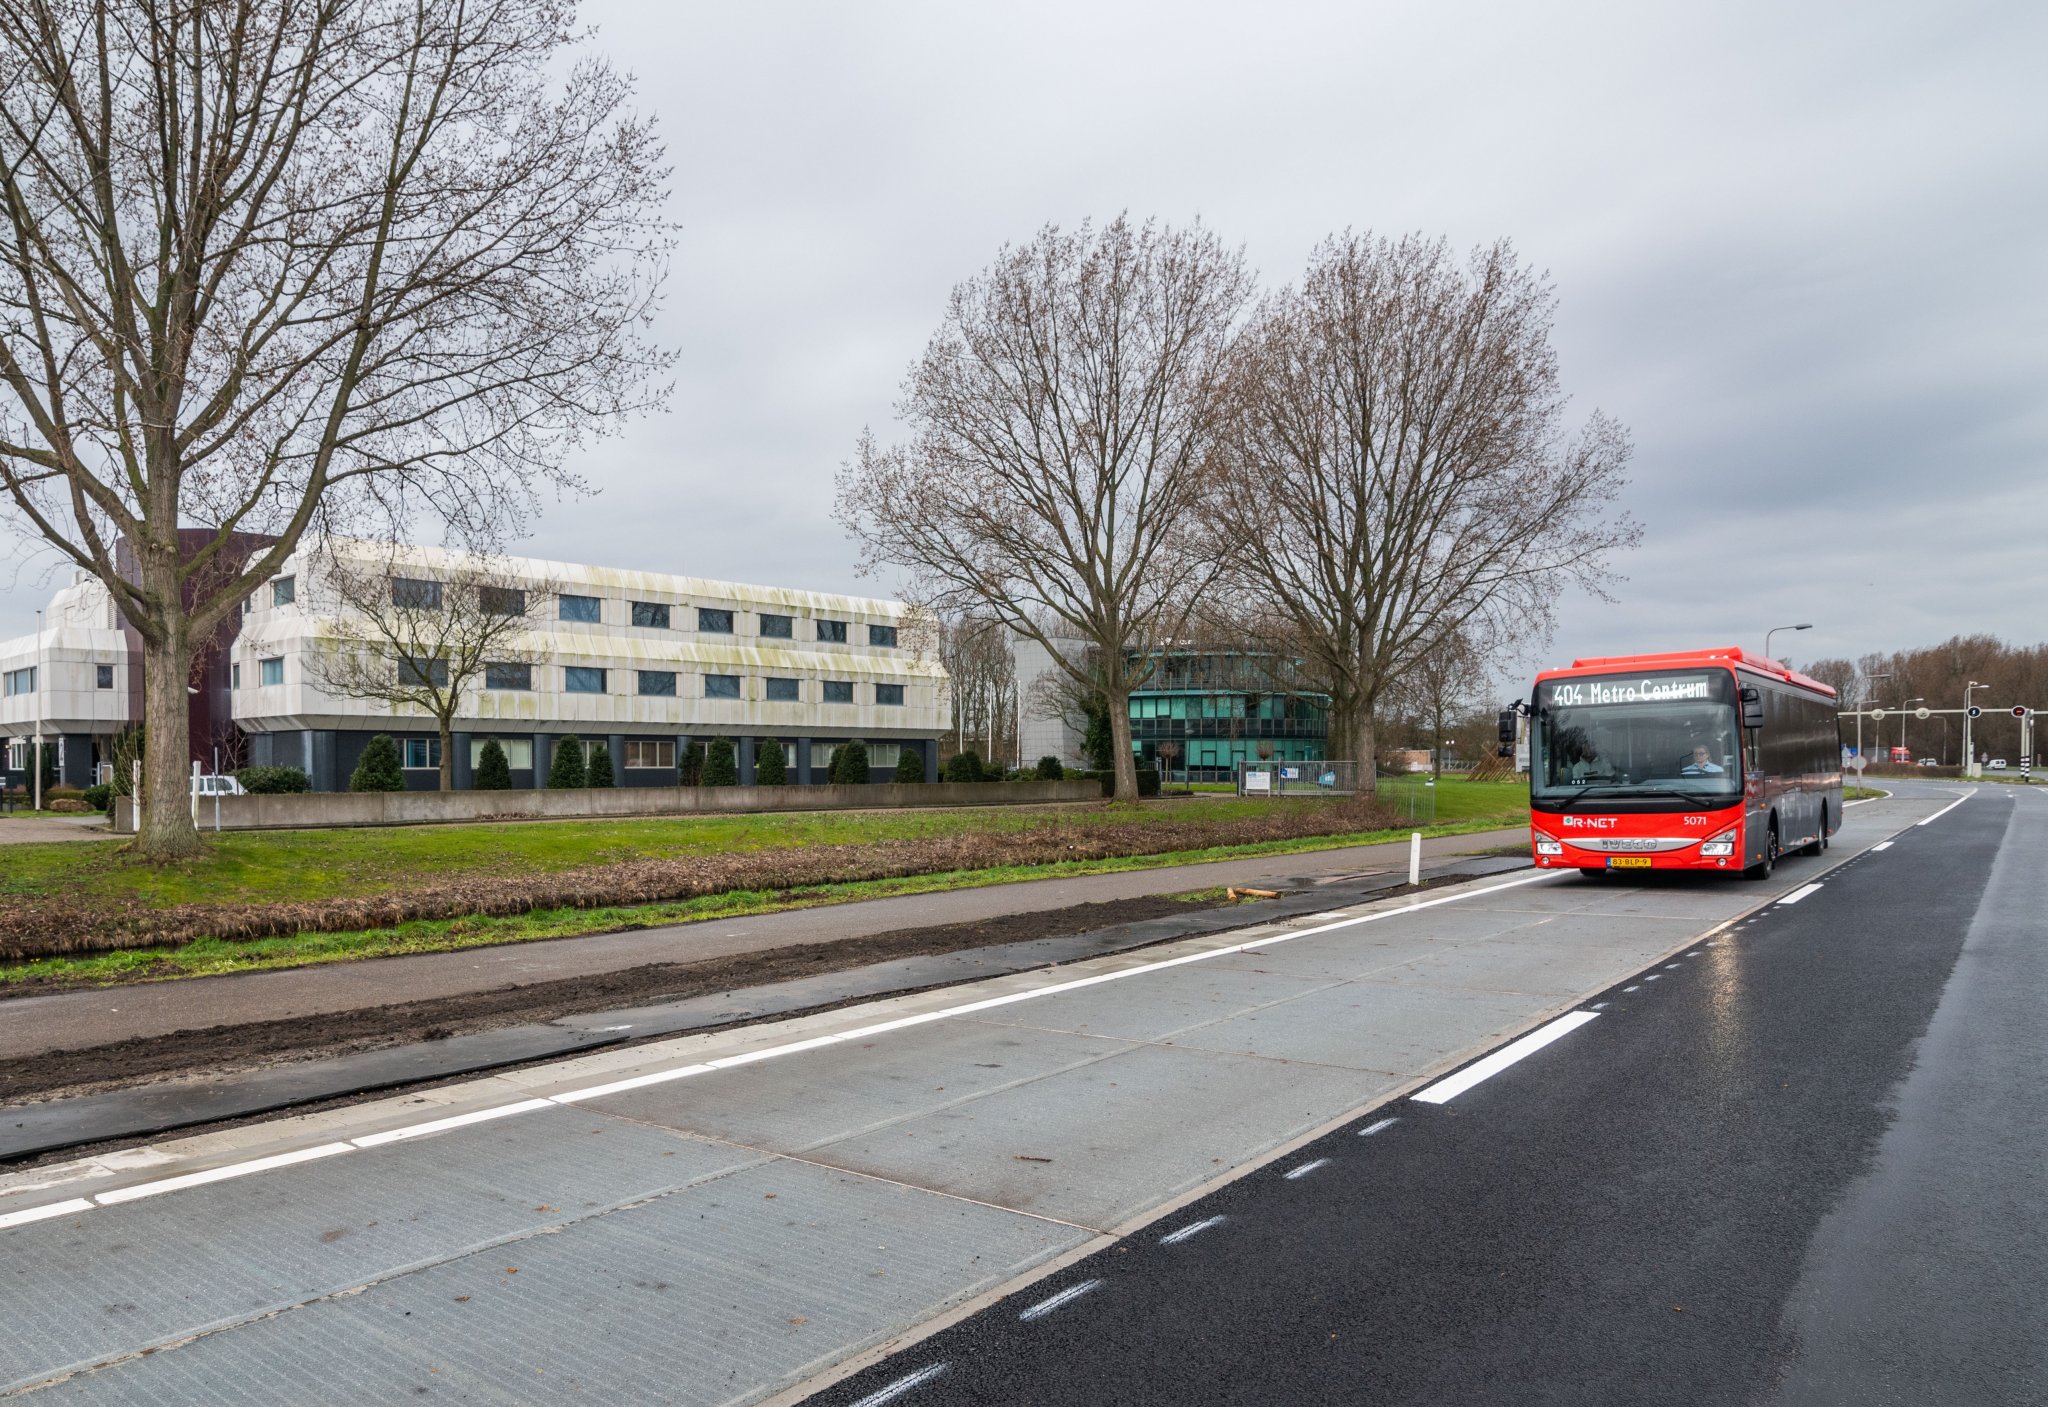 Solar powered bus lane in Spijkenisse, NL